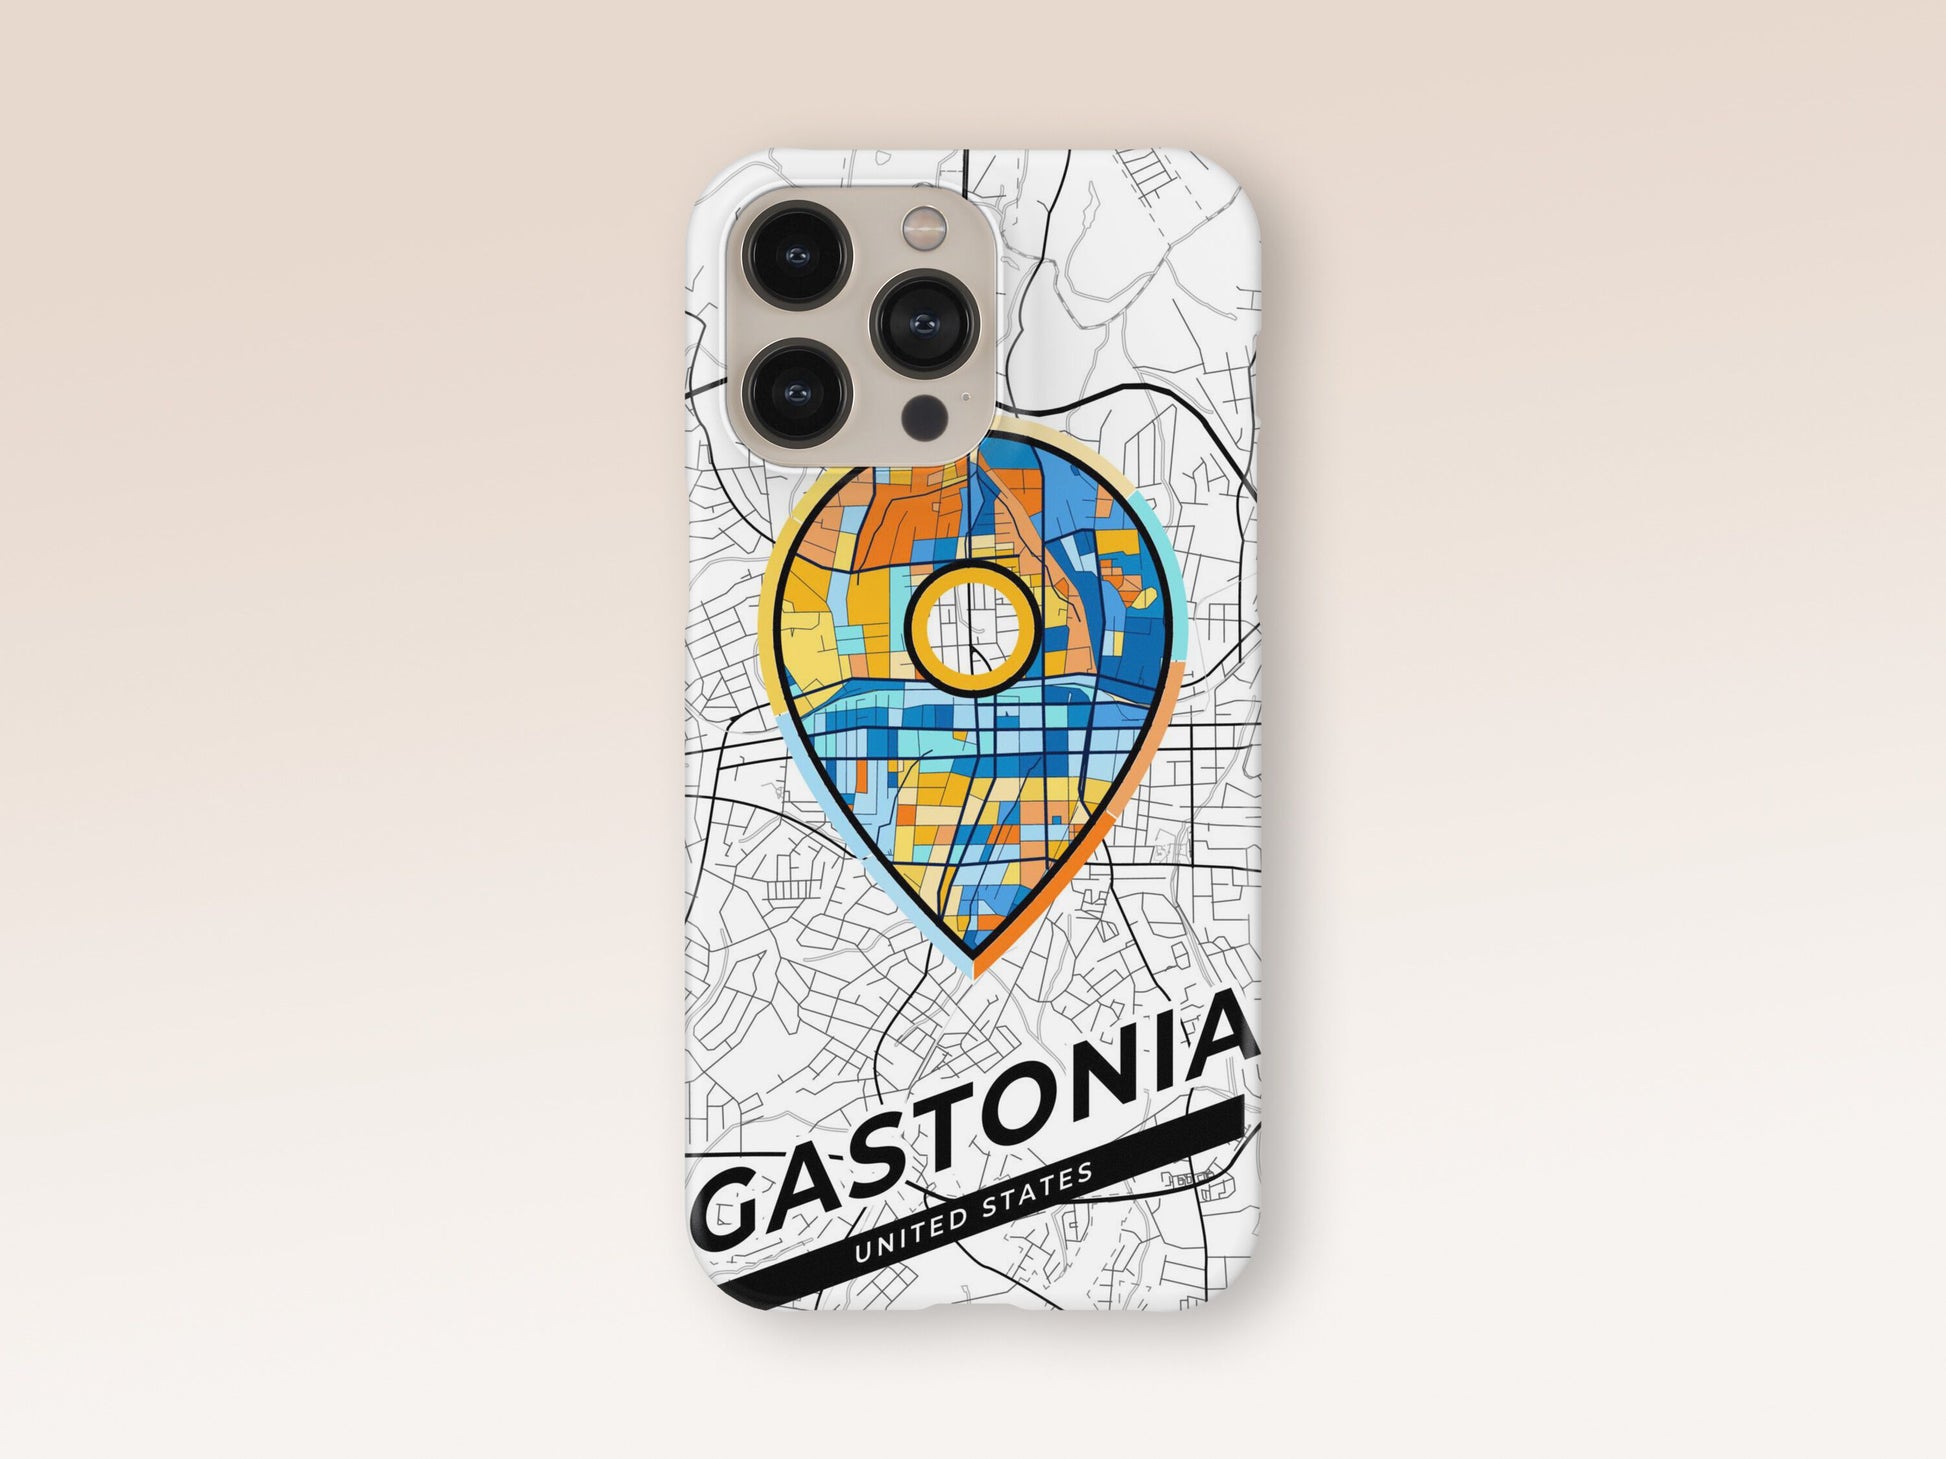 Gastonia North Carolina slim phone case with colorful icon. Birthday, wedding or housewarming gift. Couple match cases. 1